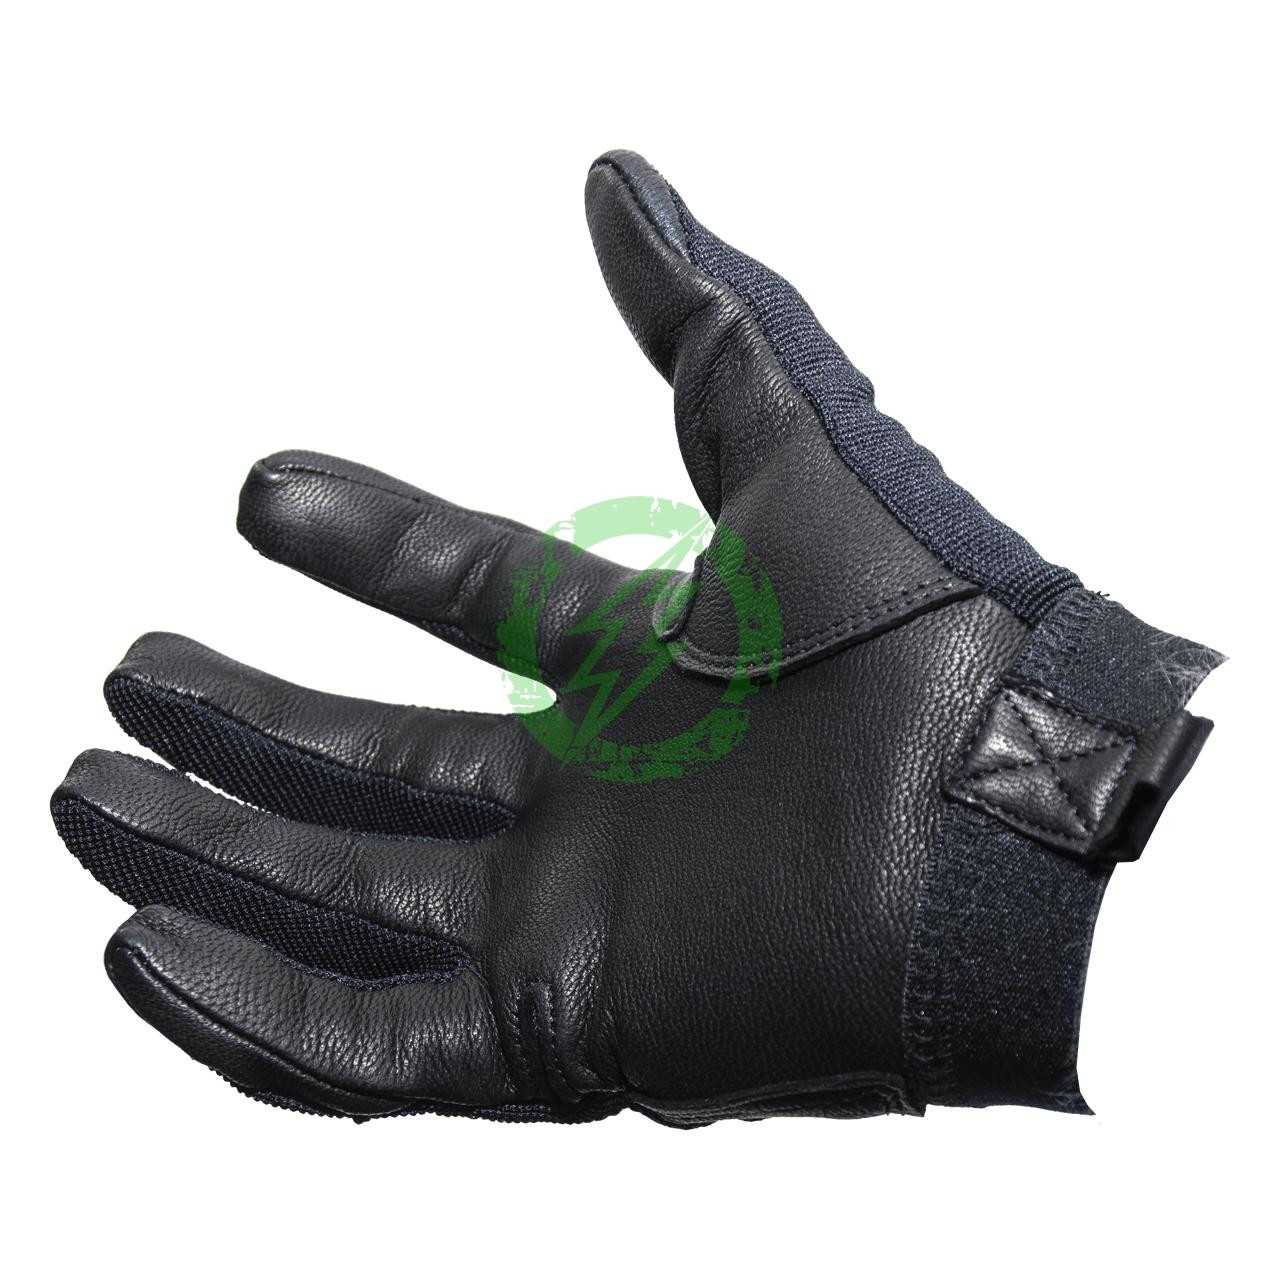  MAGPUL Black Patrol Glove 2.0 